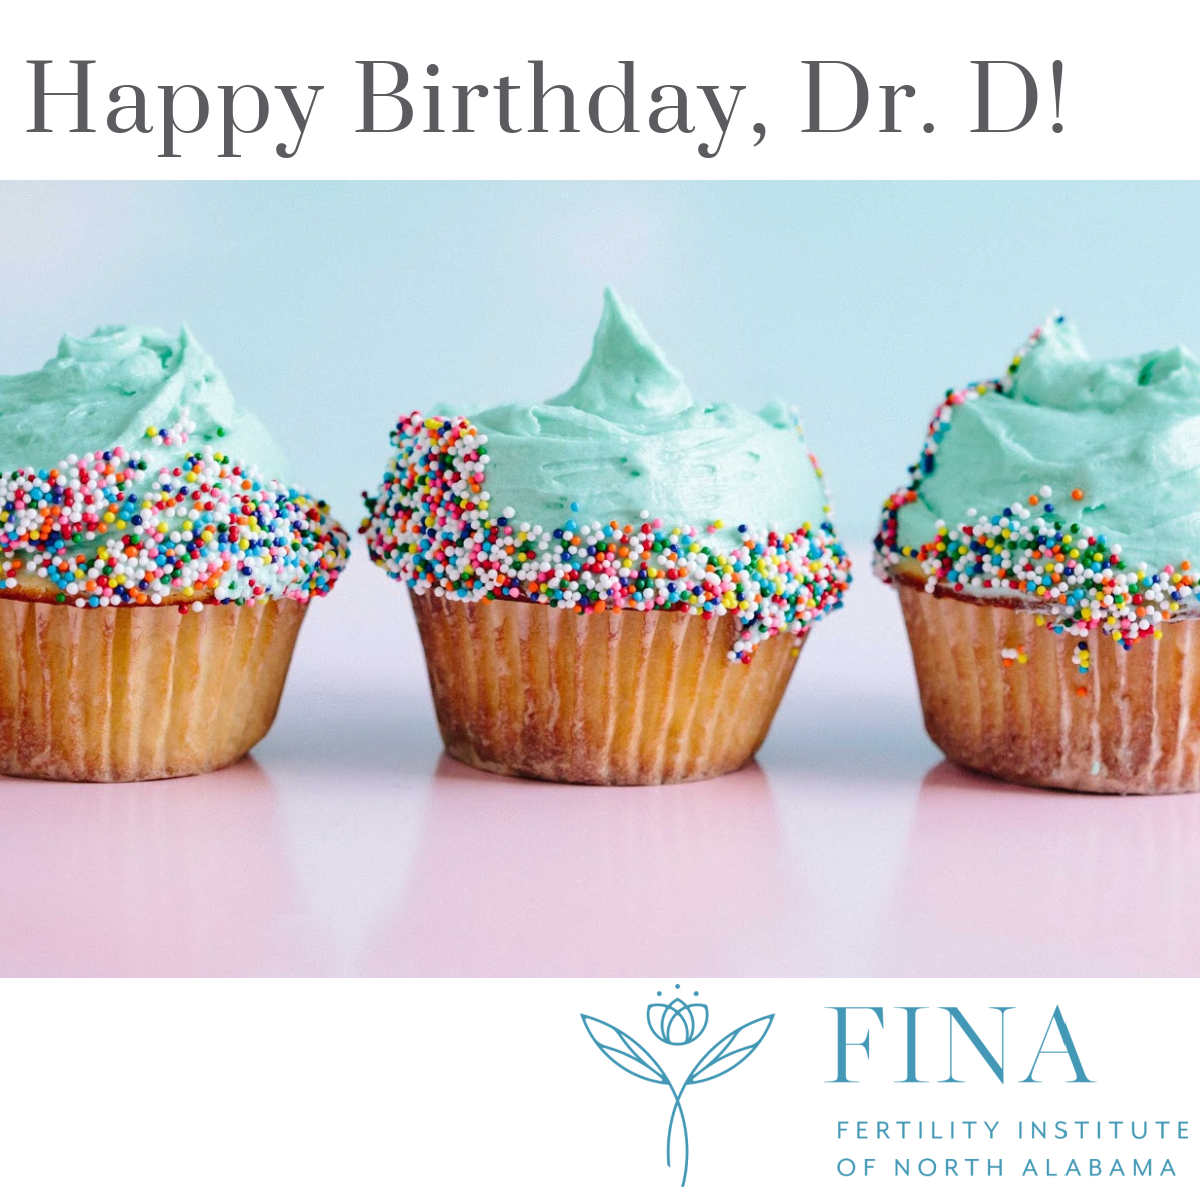 Happy Birthday, Dr. D!